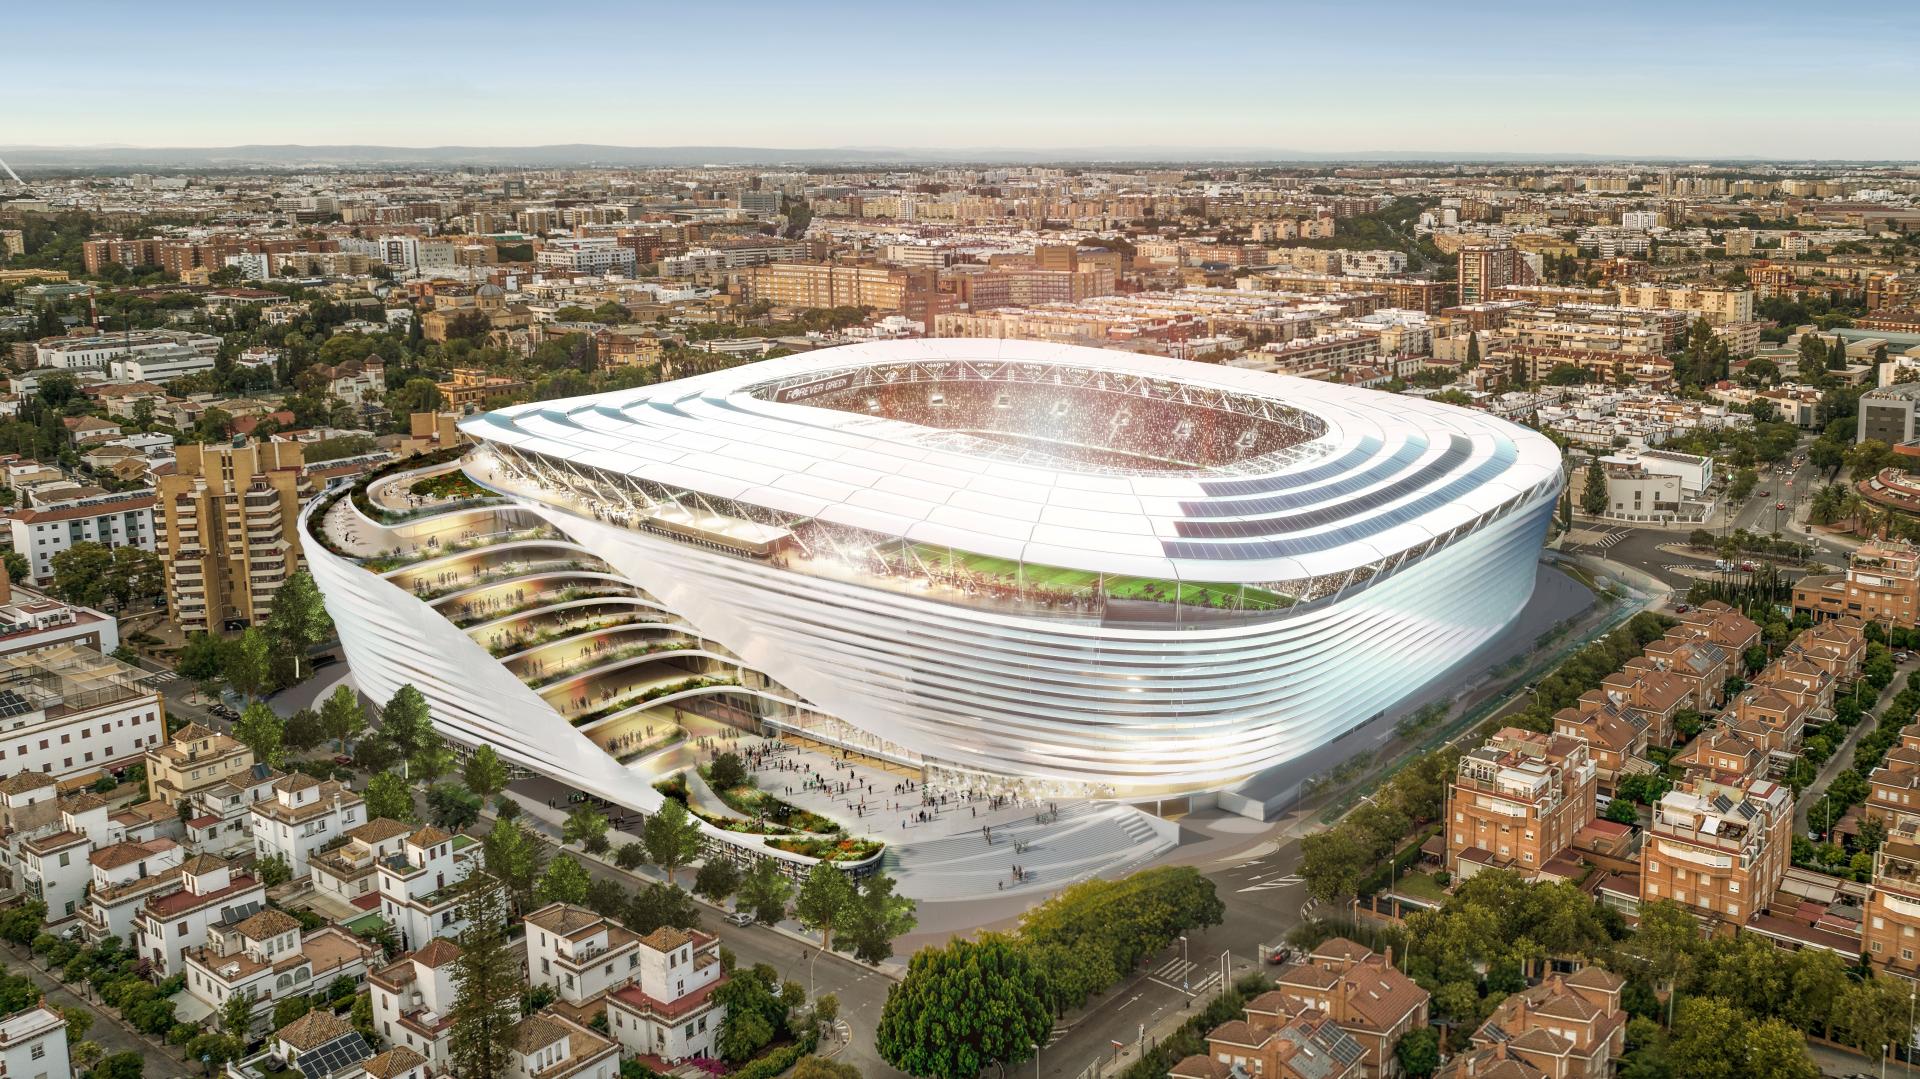 Real Betis awards the design of the new Benito Villamarín Stadium to Rafael  de la-Hoz and Gensler - Real Betis Balompié